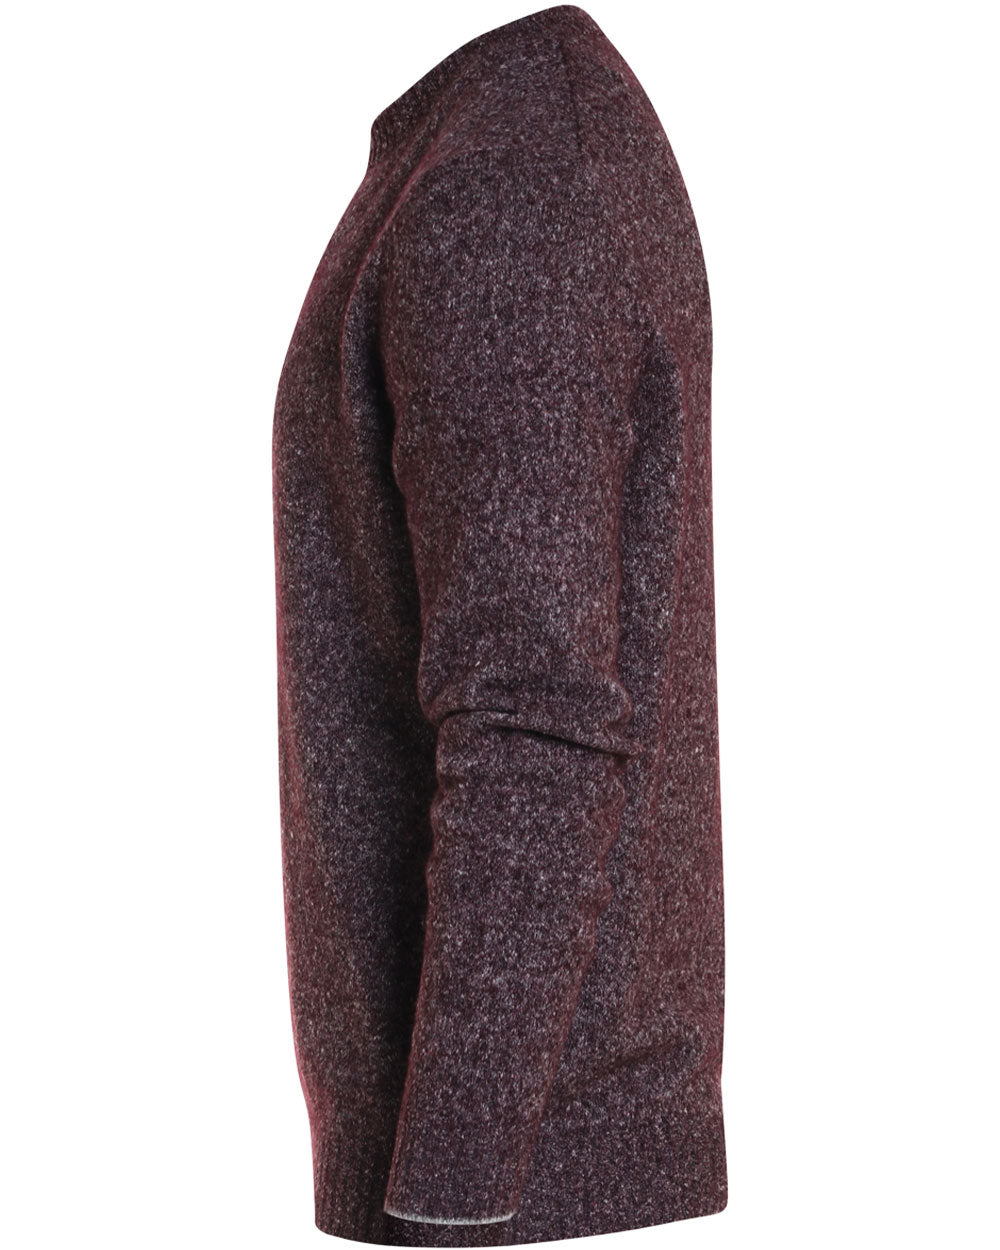 Burgundy Alpacca Blend Melange Sweater